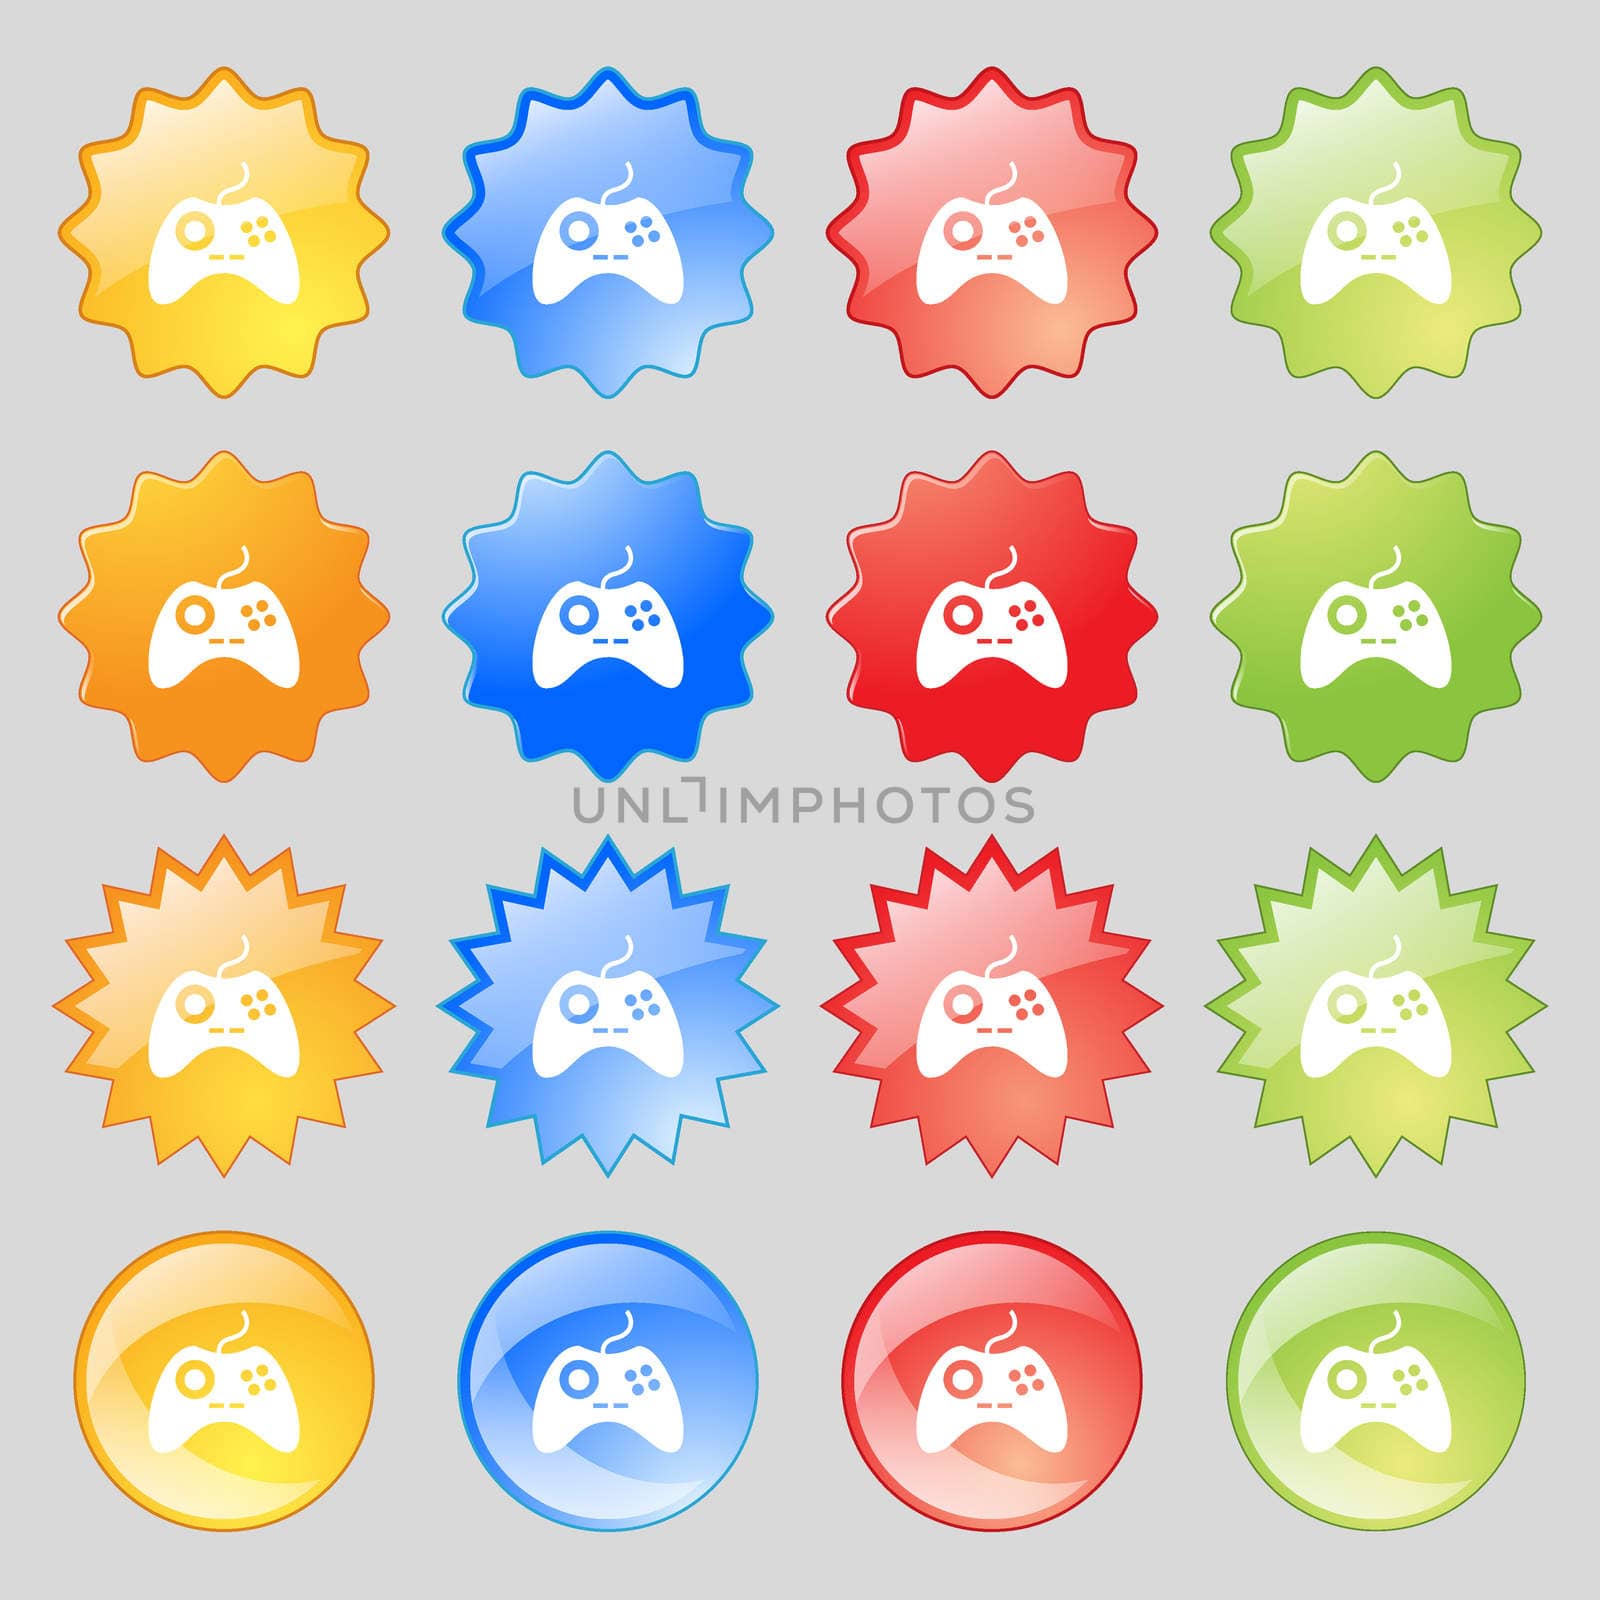 Joystick sign icon. Video game symbol. Big set of 16 colorful modern buttons for your design. illustration